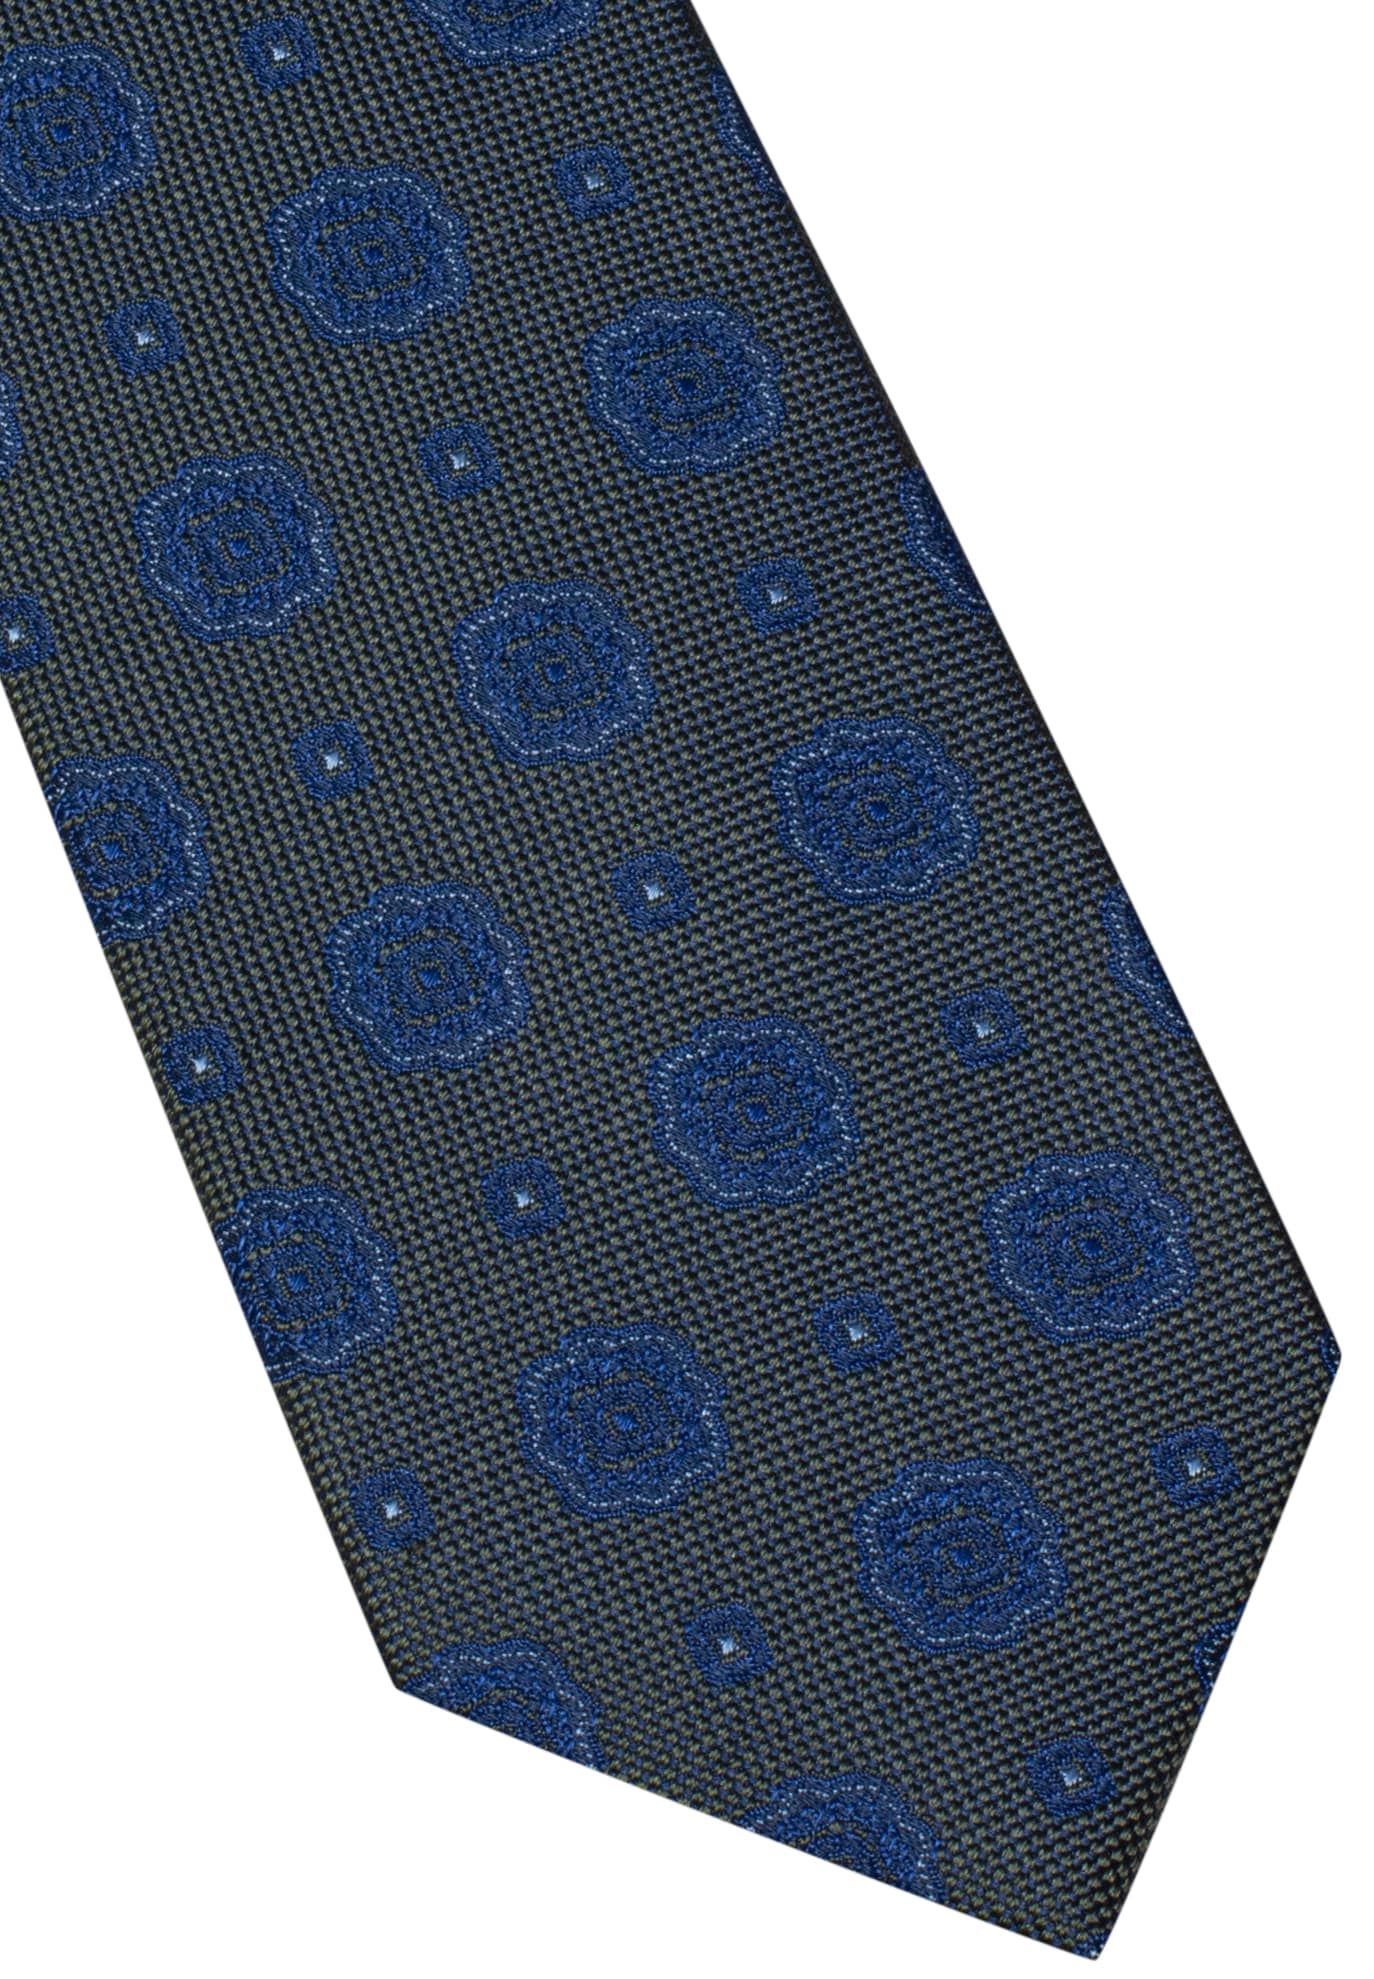 Krawatte in blau/grün blau/grün gemustert | | 1AC00183-81-48-142 142 